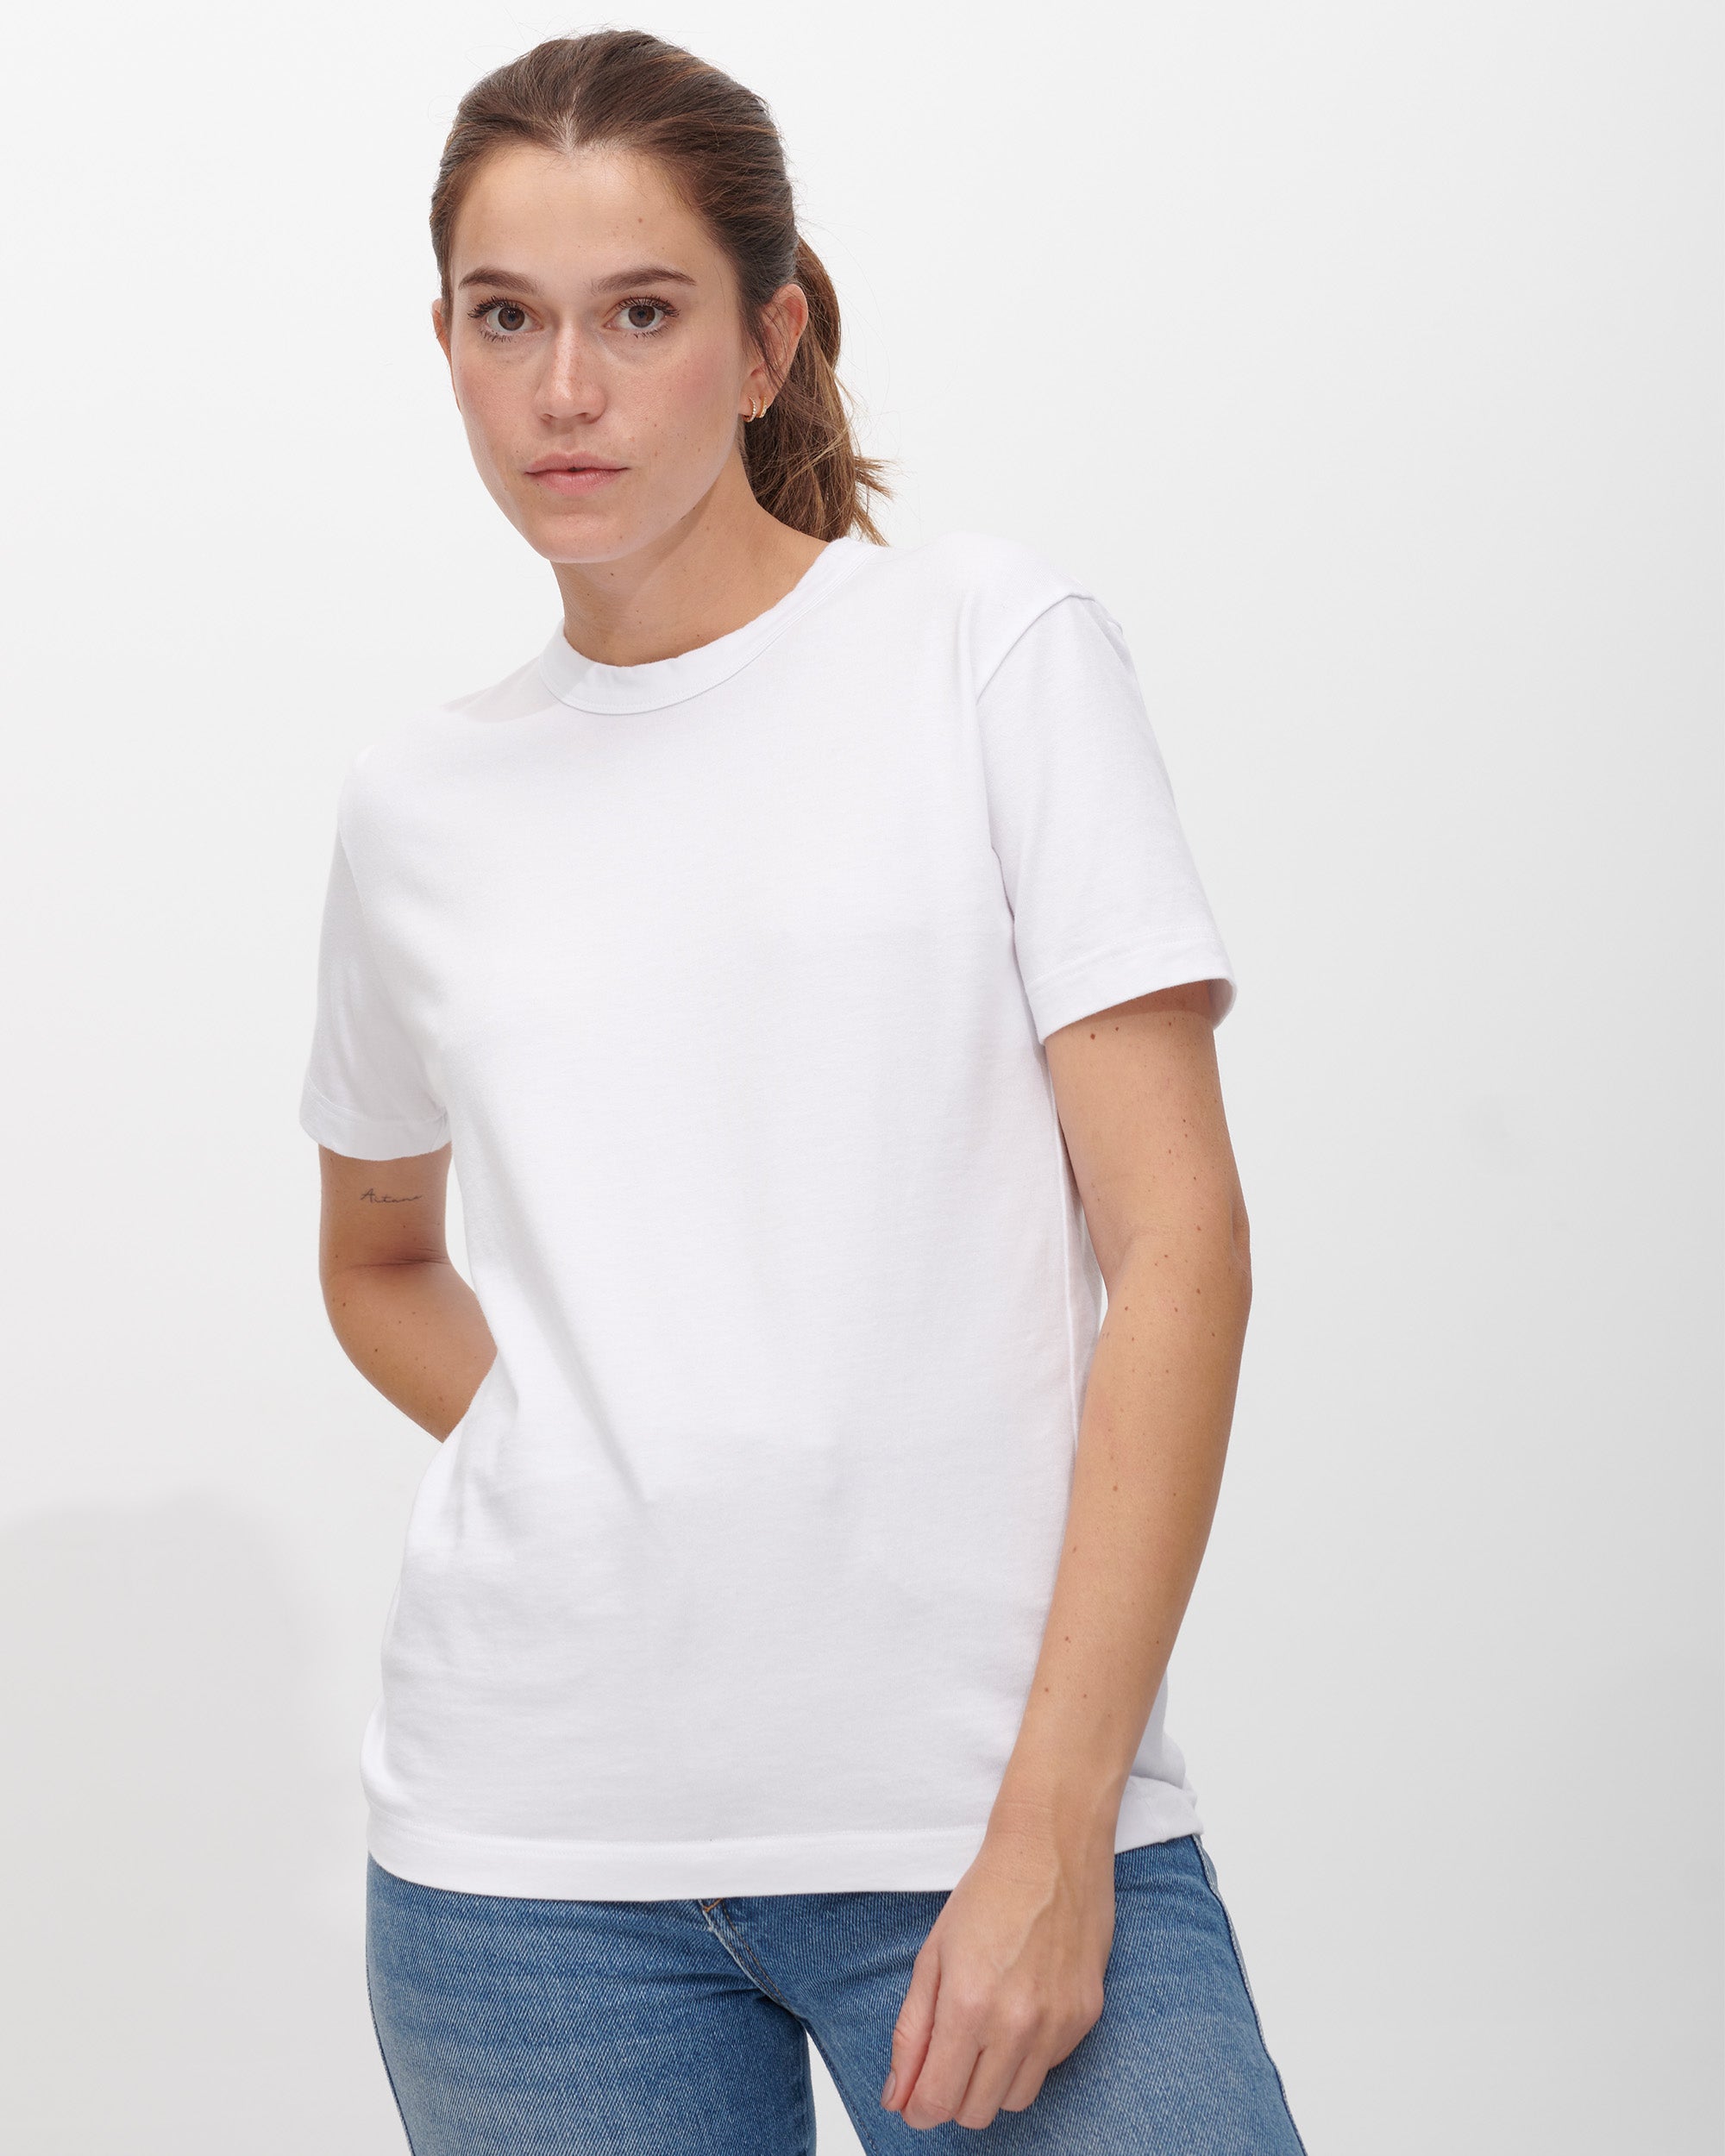 Women's Basic White Blouse. 100% Cotton. Round Neck. Shirt For Women